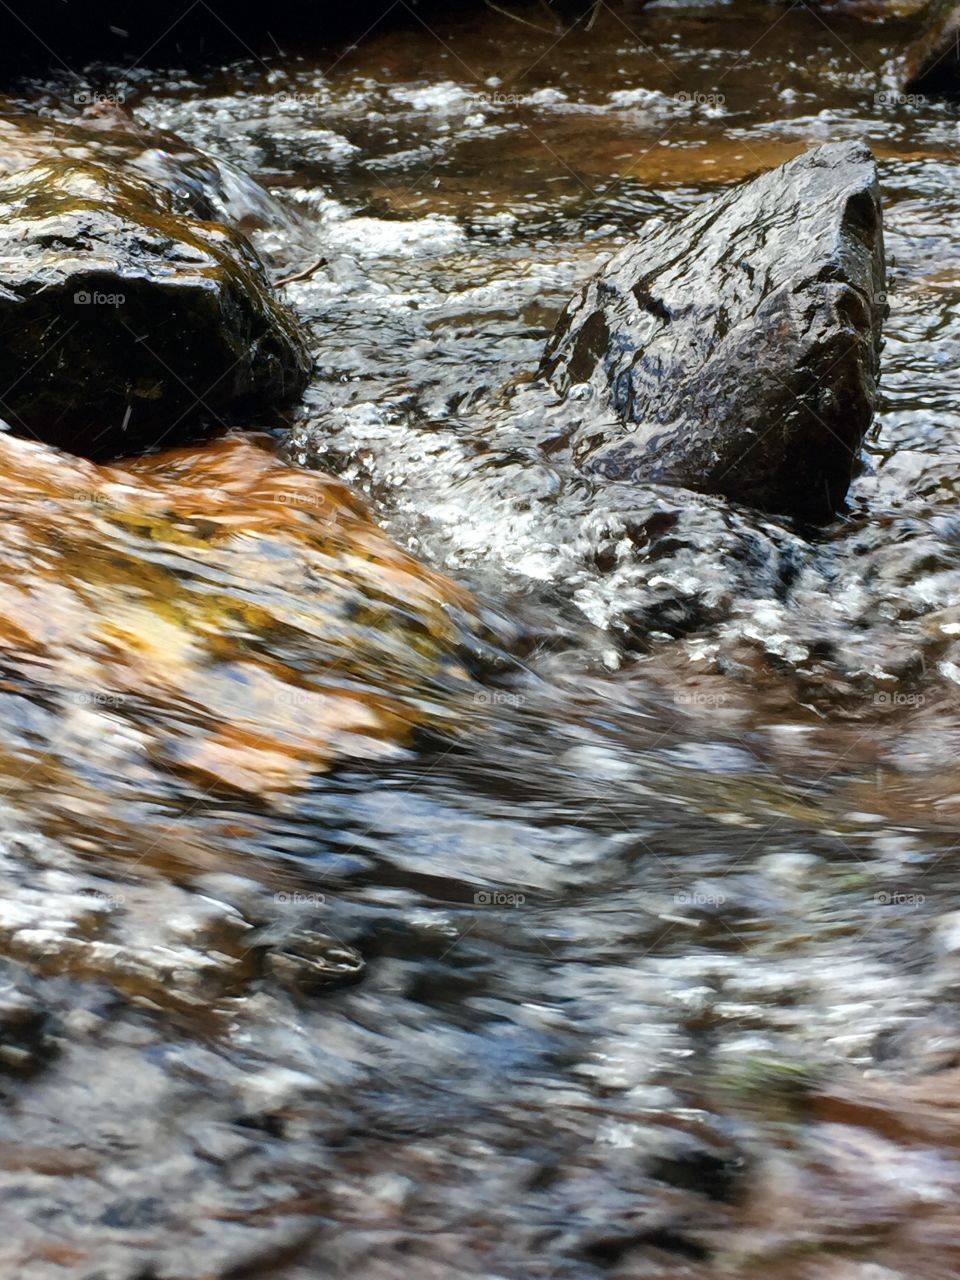 Rushing water